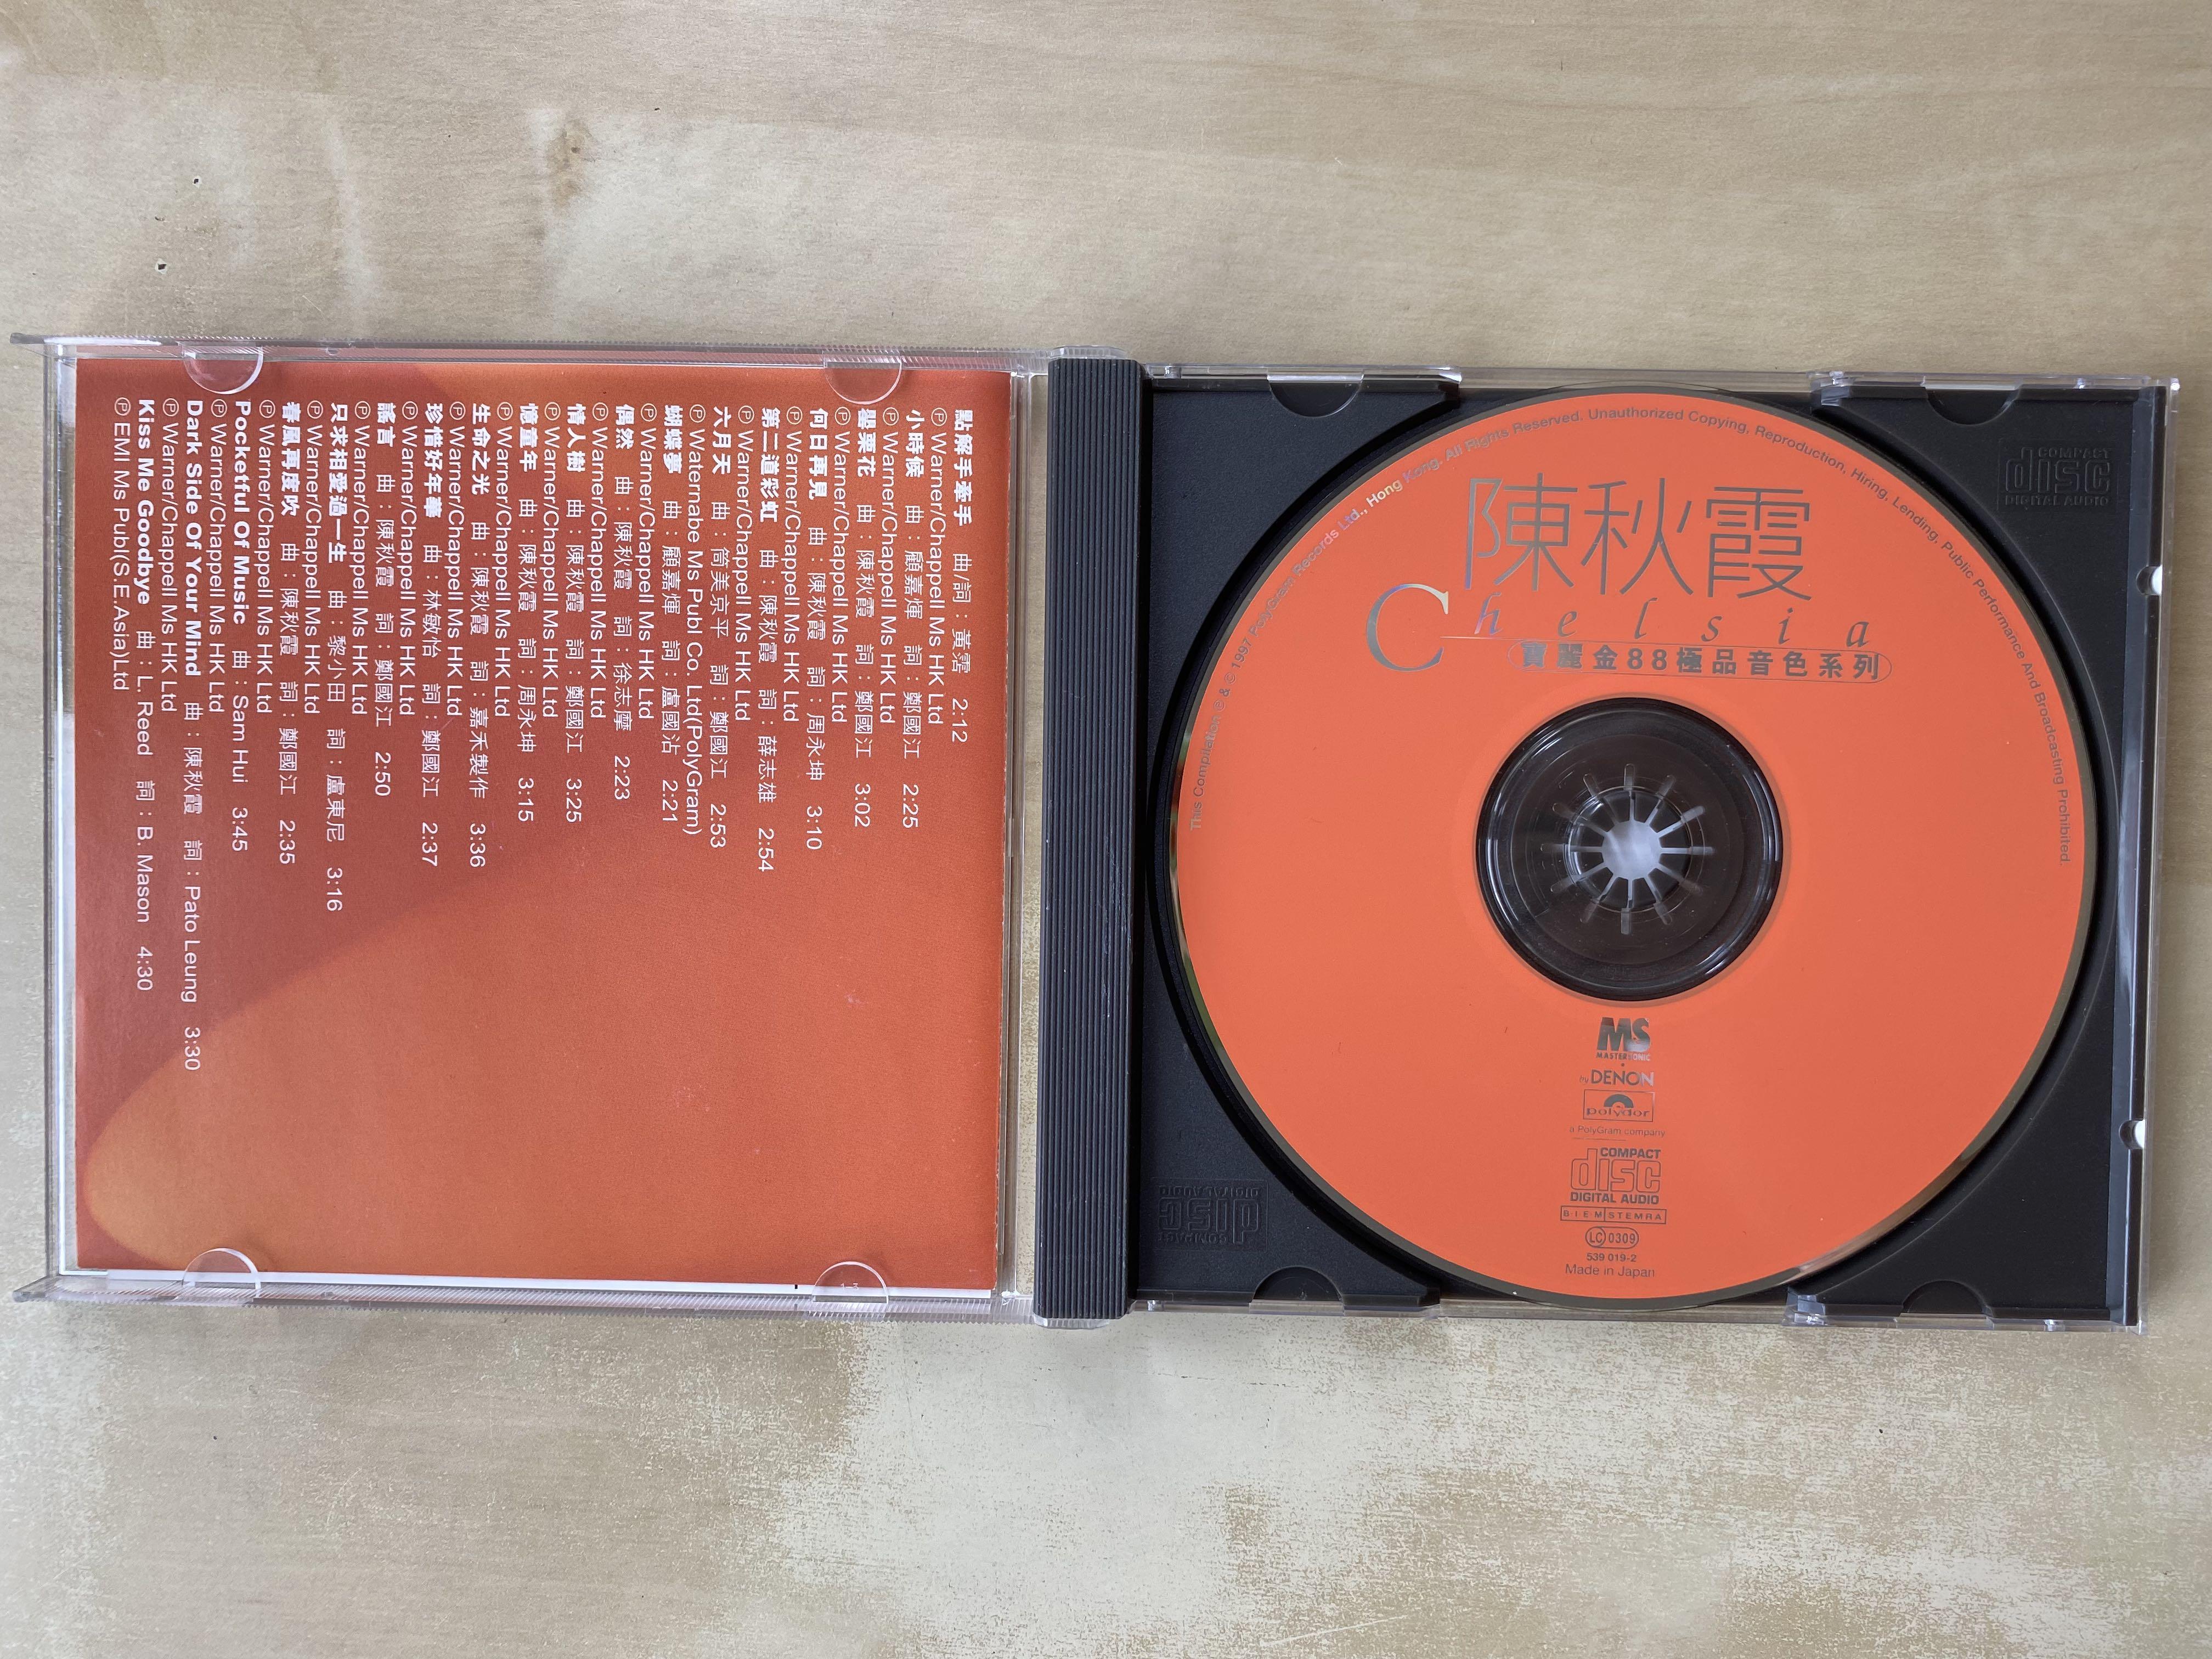 CD丨陳秋霞寶麗金88極品音色系列/ PolyGram 88 Collection Chelsia 